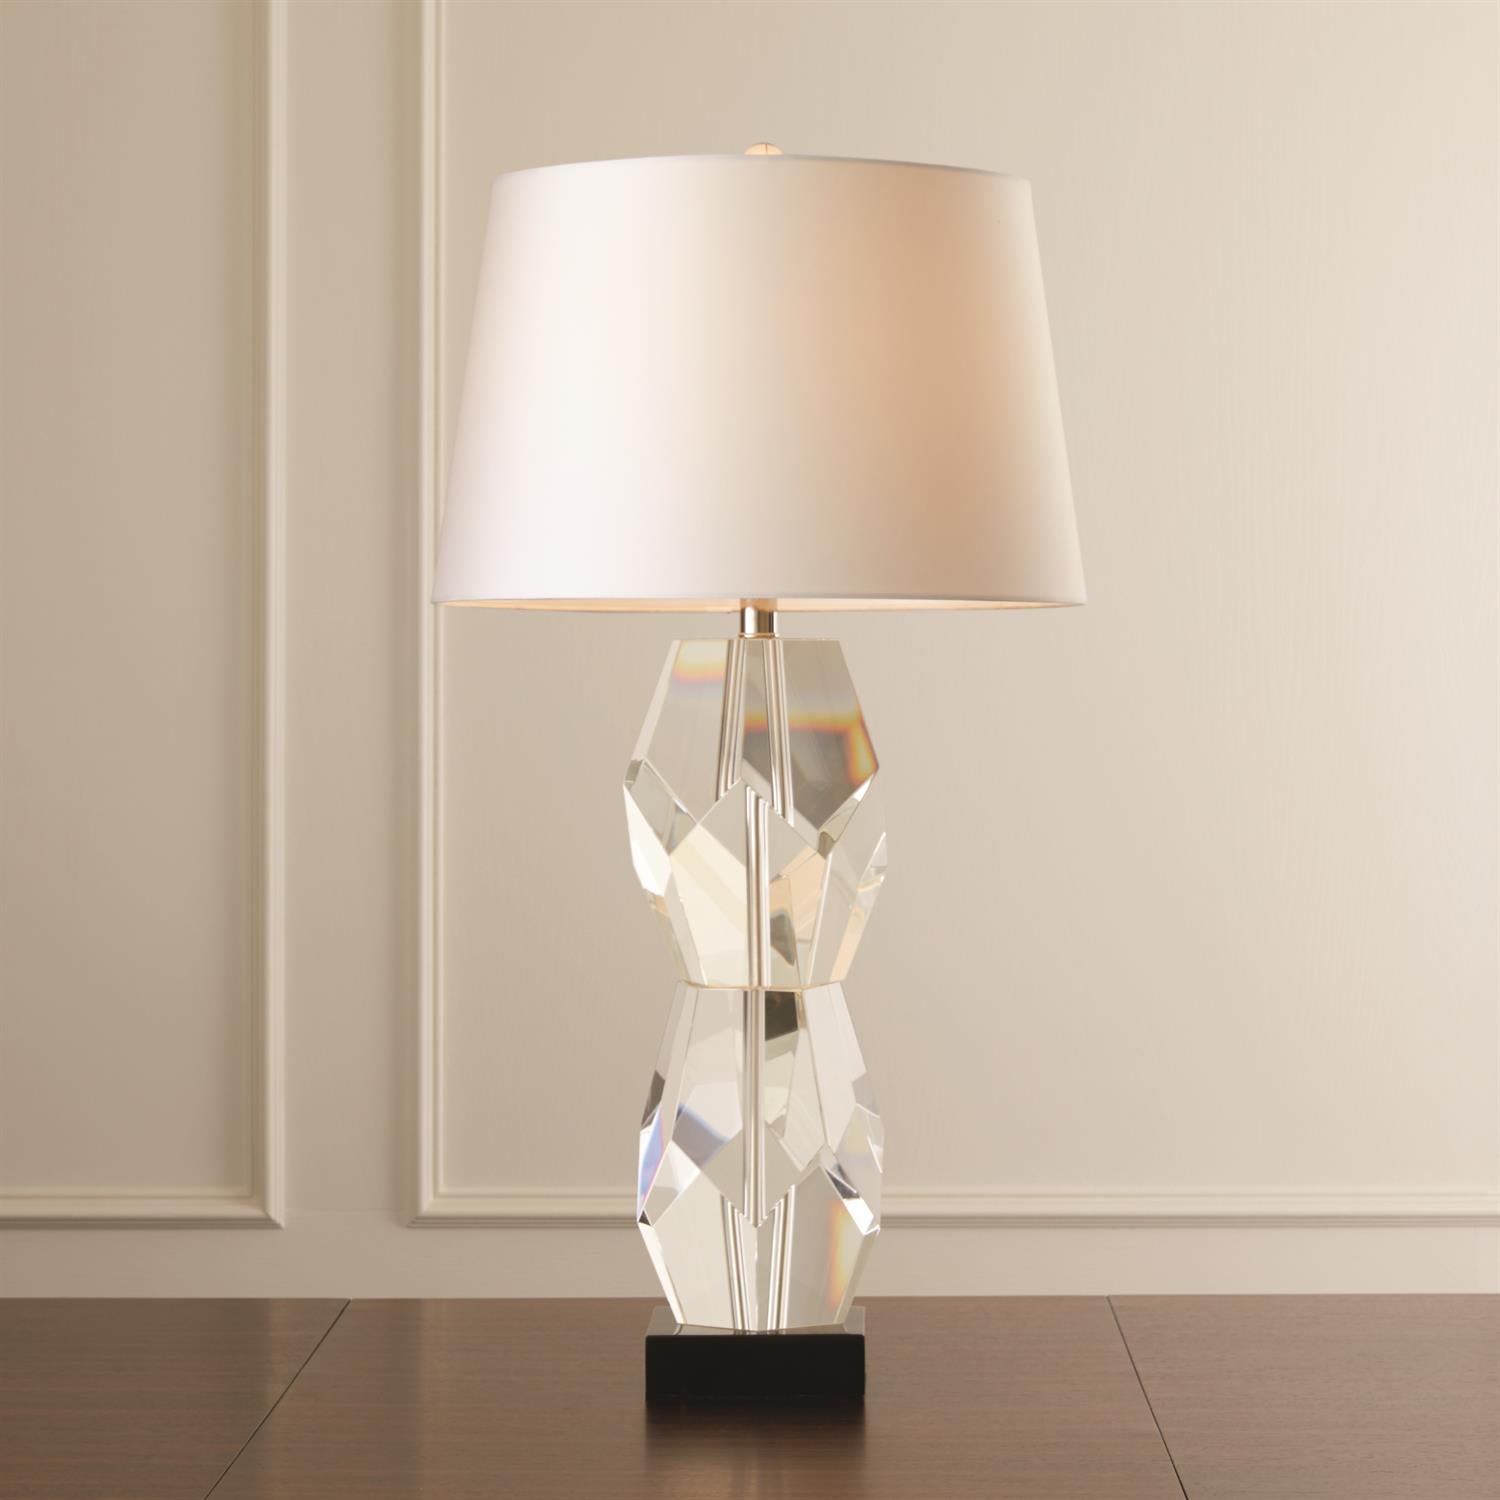 Facet Block Lamp - Double - Grats Decor Interior Design & Build Inc.